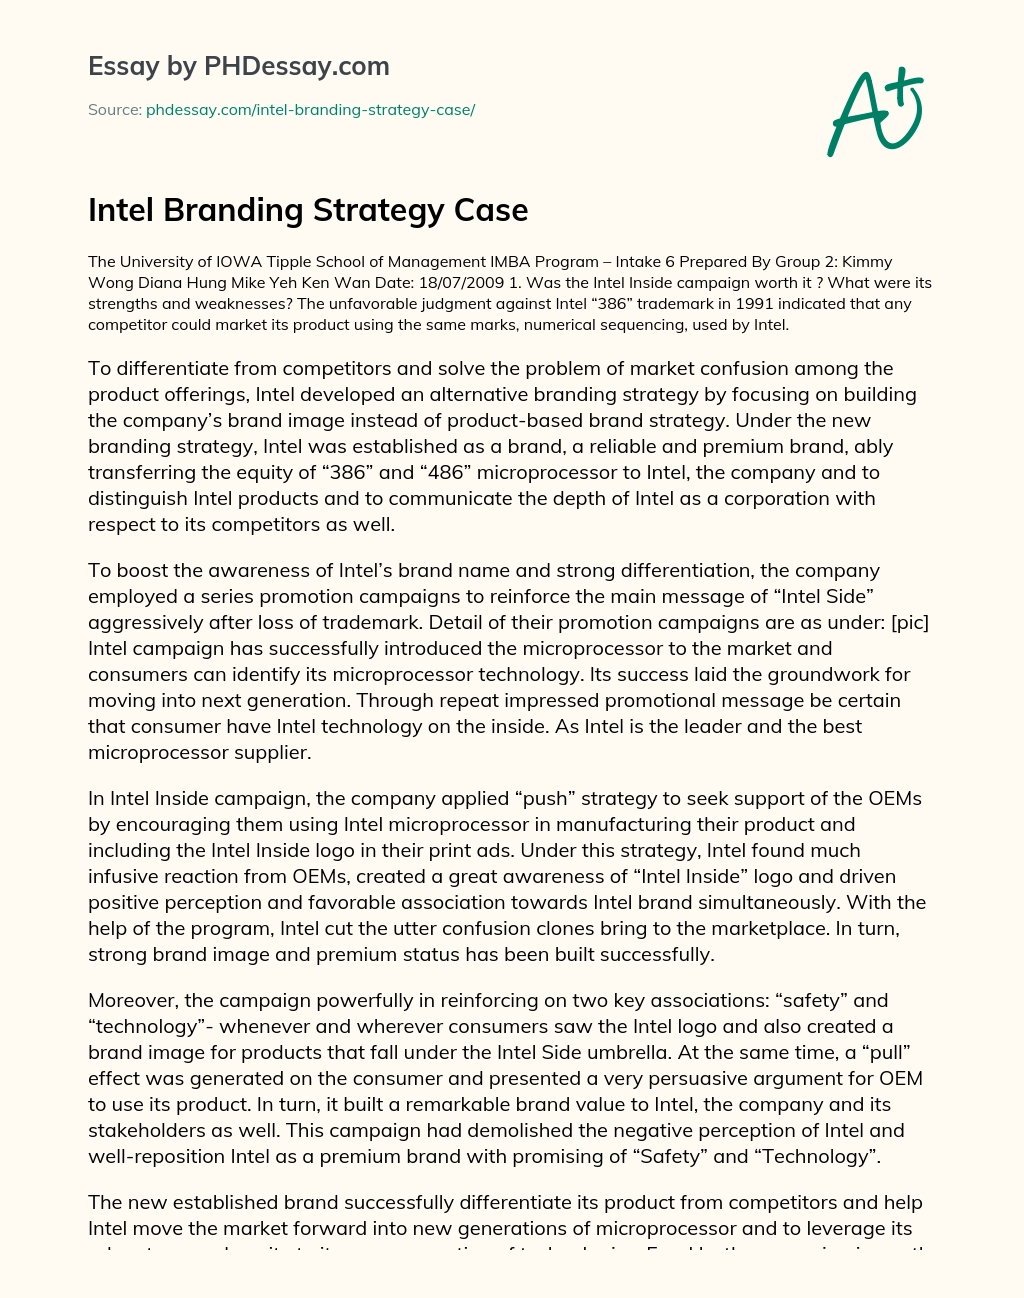 Intel Branding Strategy Case essay